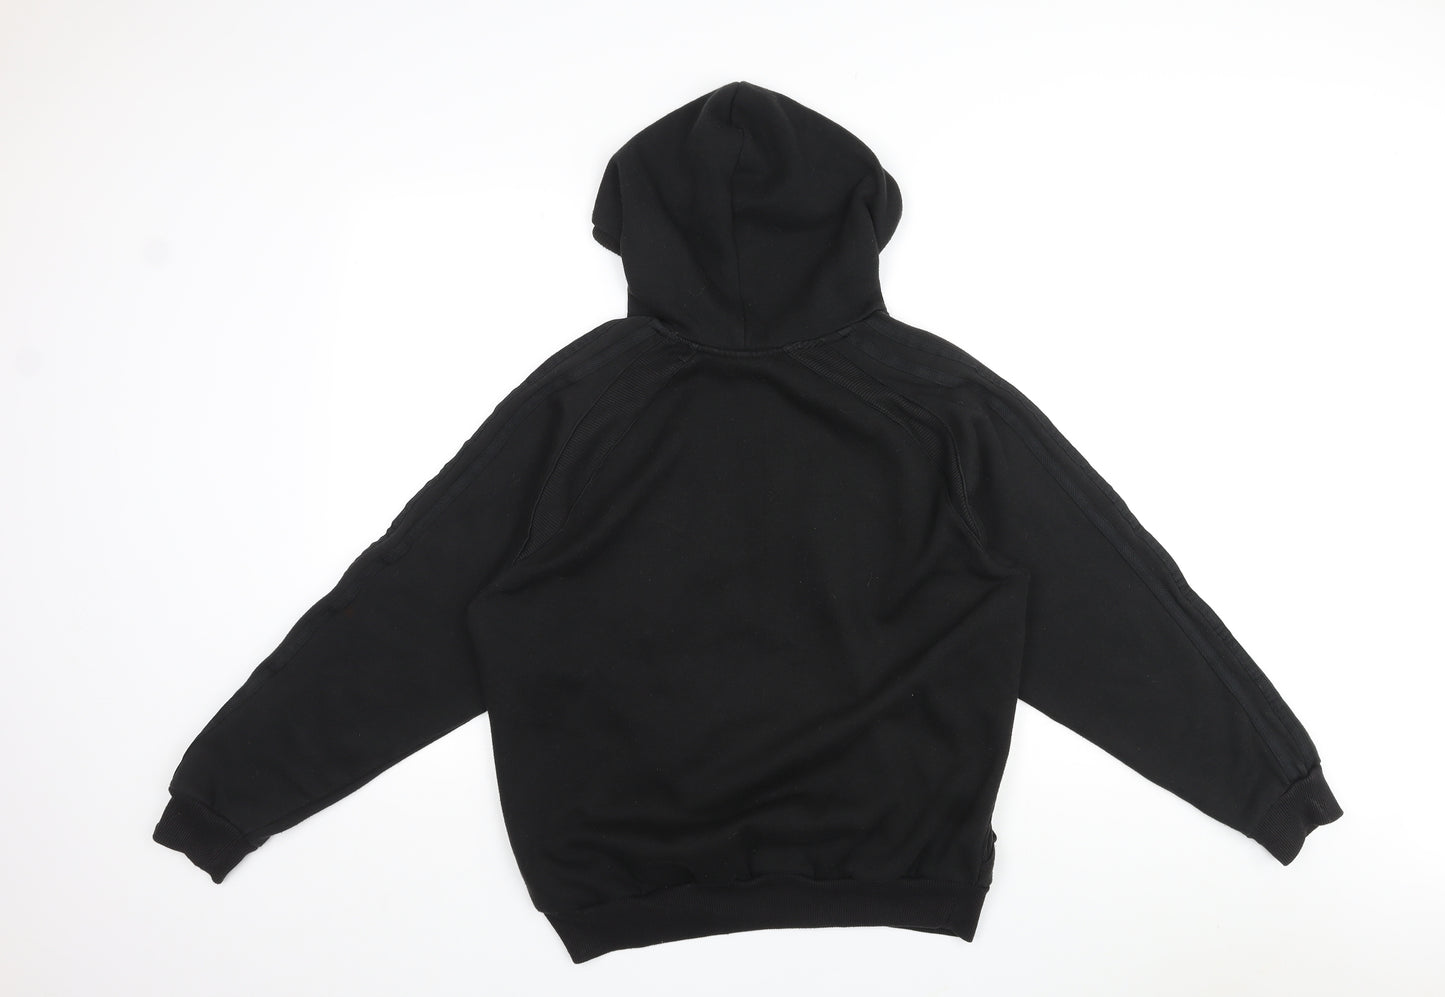 Lonsdale Mens Black Polyester Pullover Hoodie Size M - Logo, Pocket, Drawstring